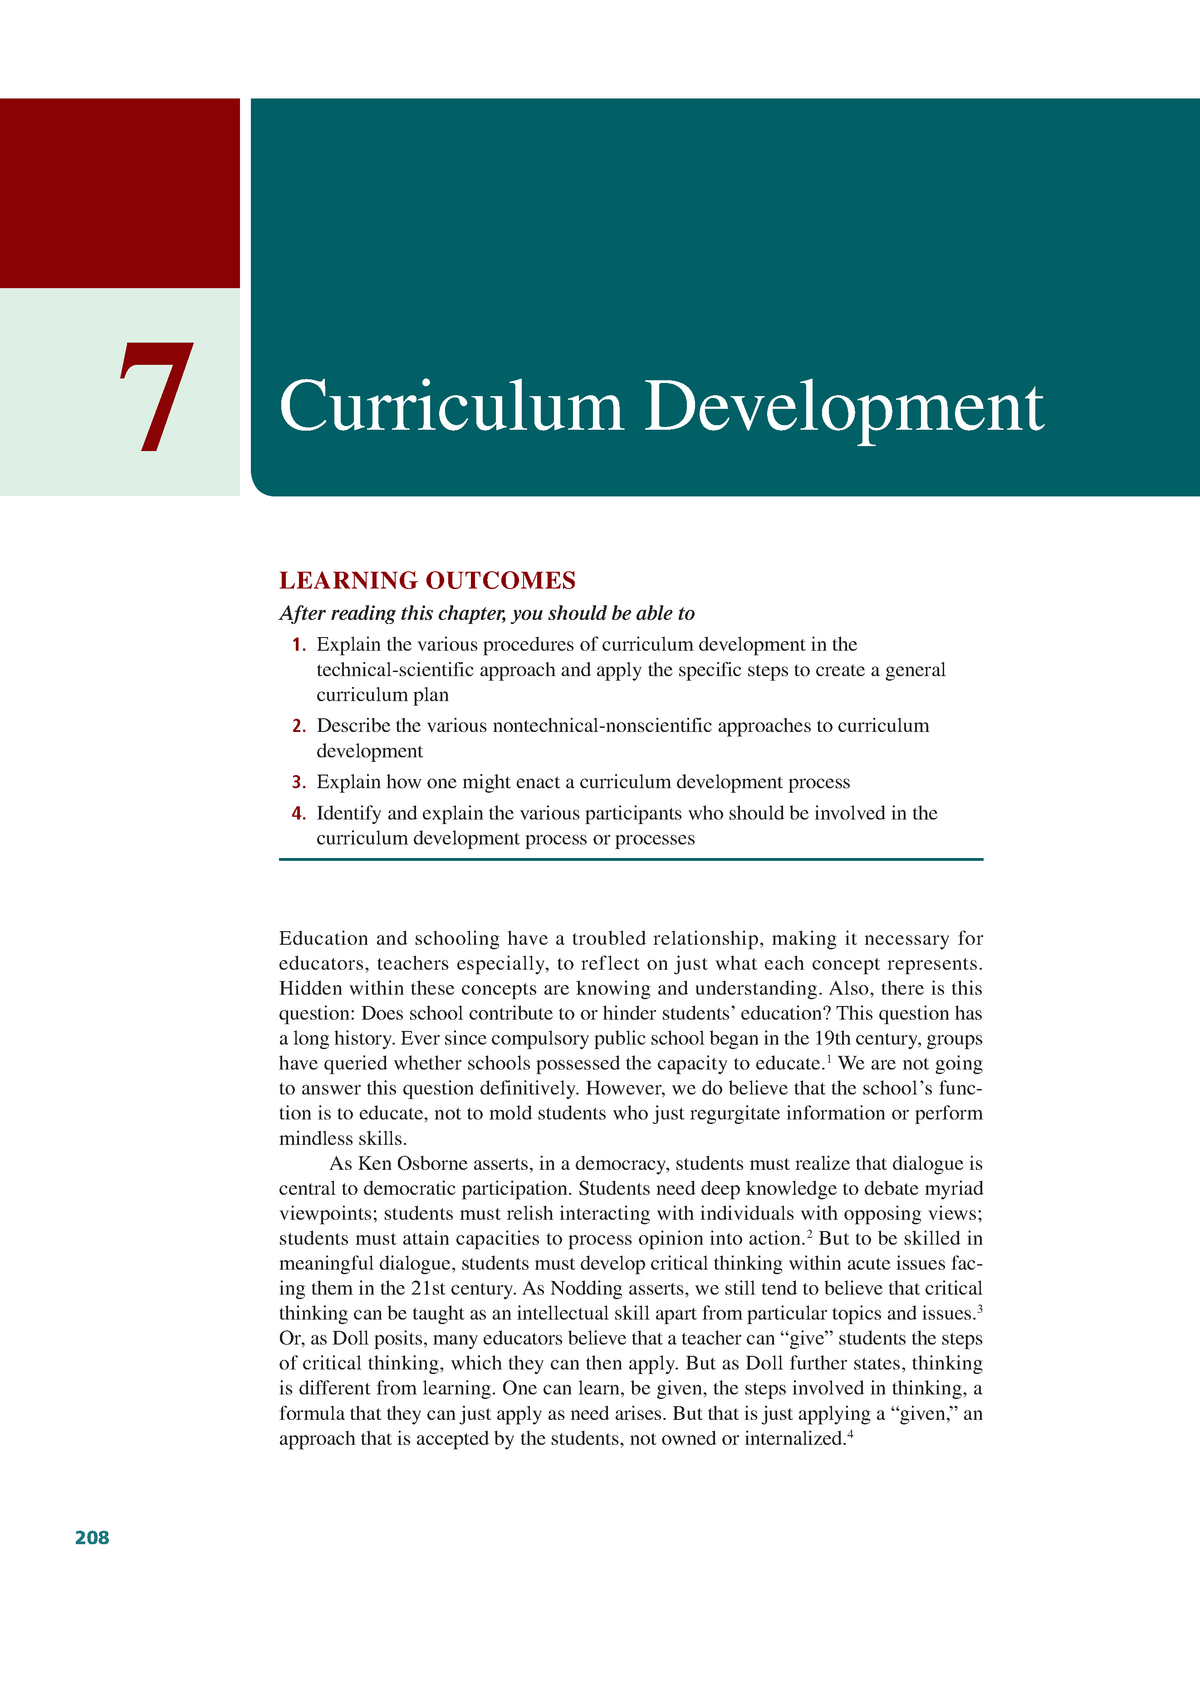 essay curriculum development